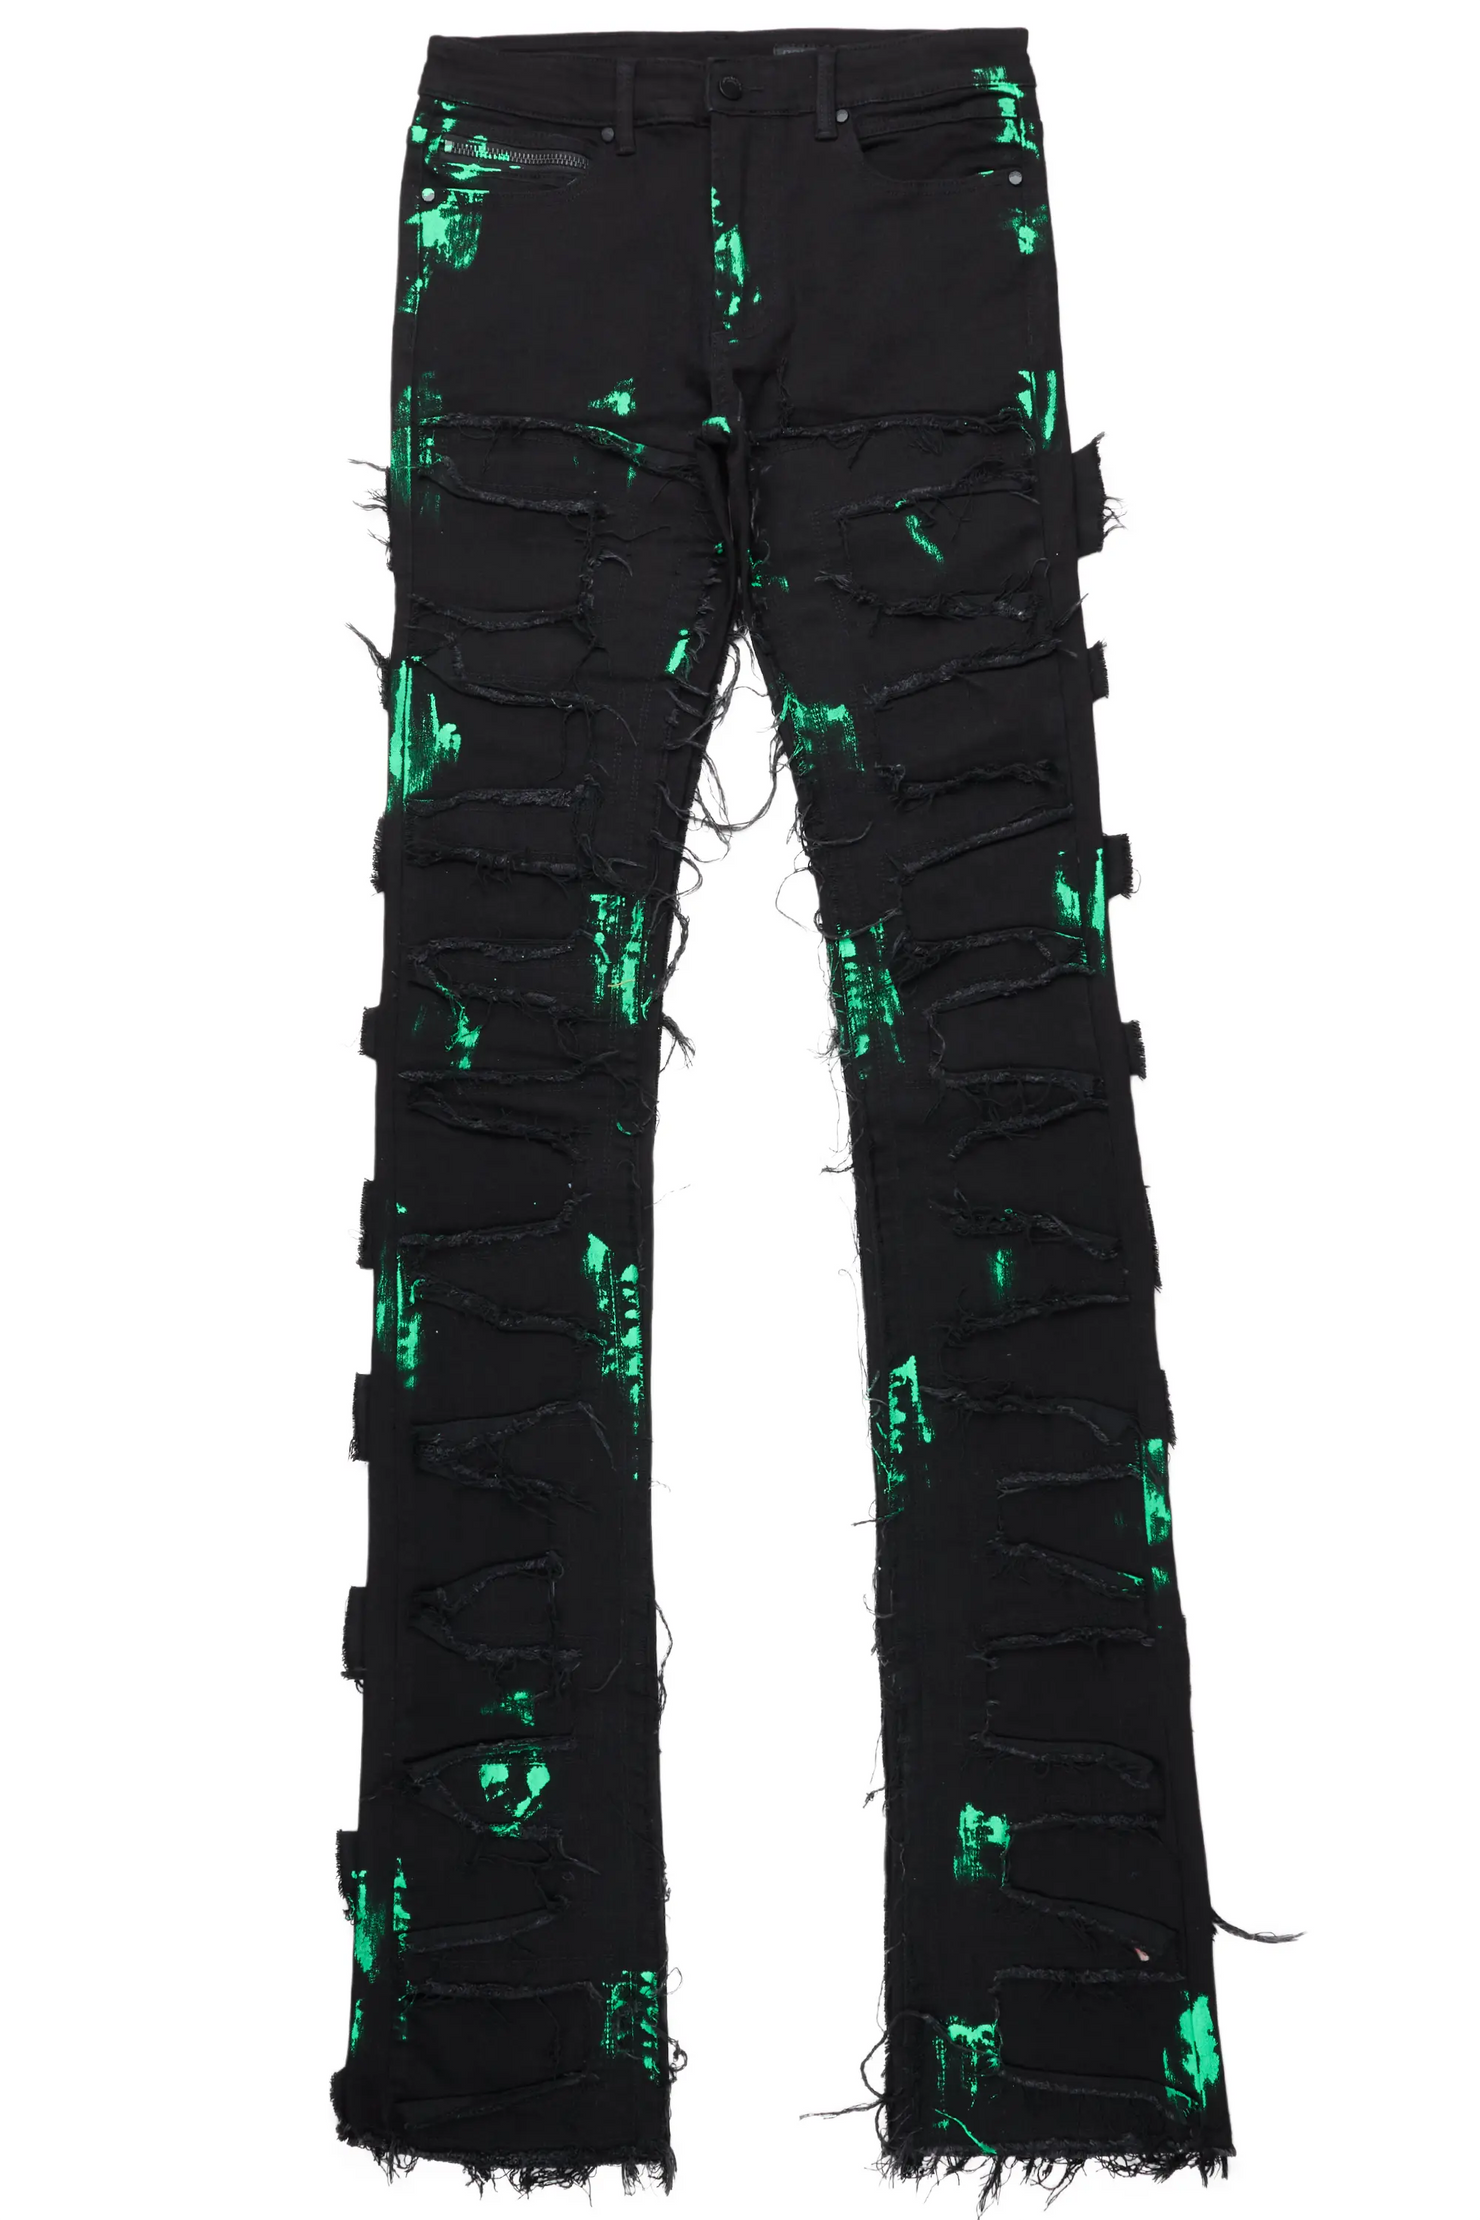 Gideon Black/Green Super Stacked Flare Jean